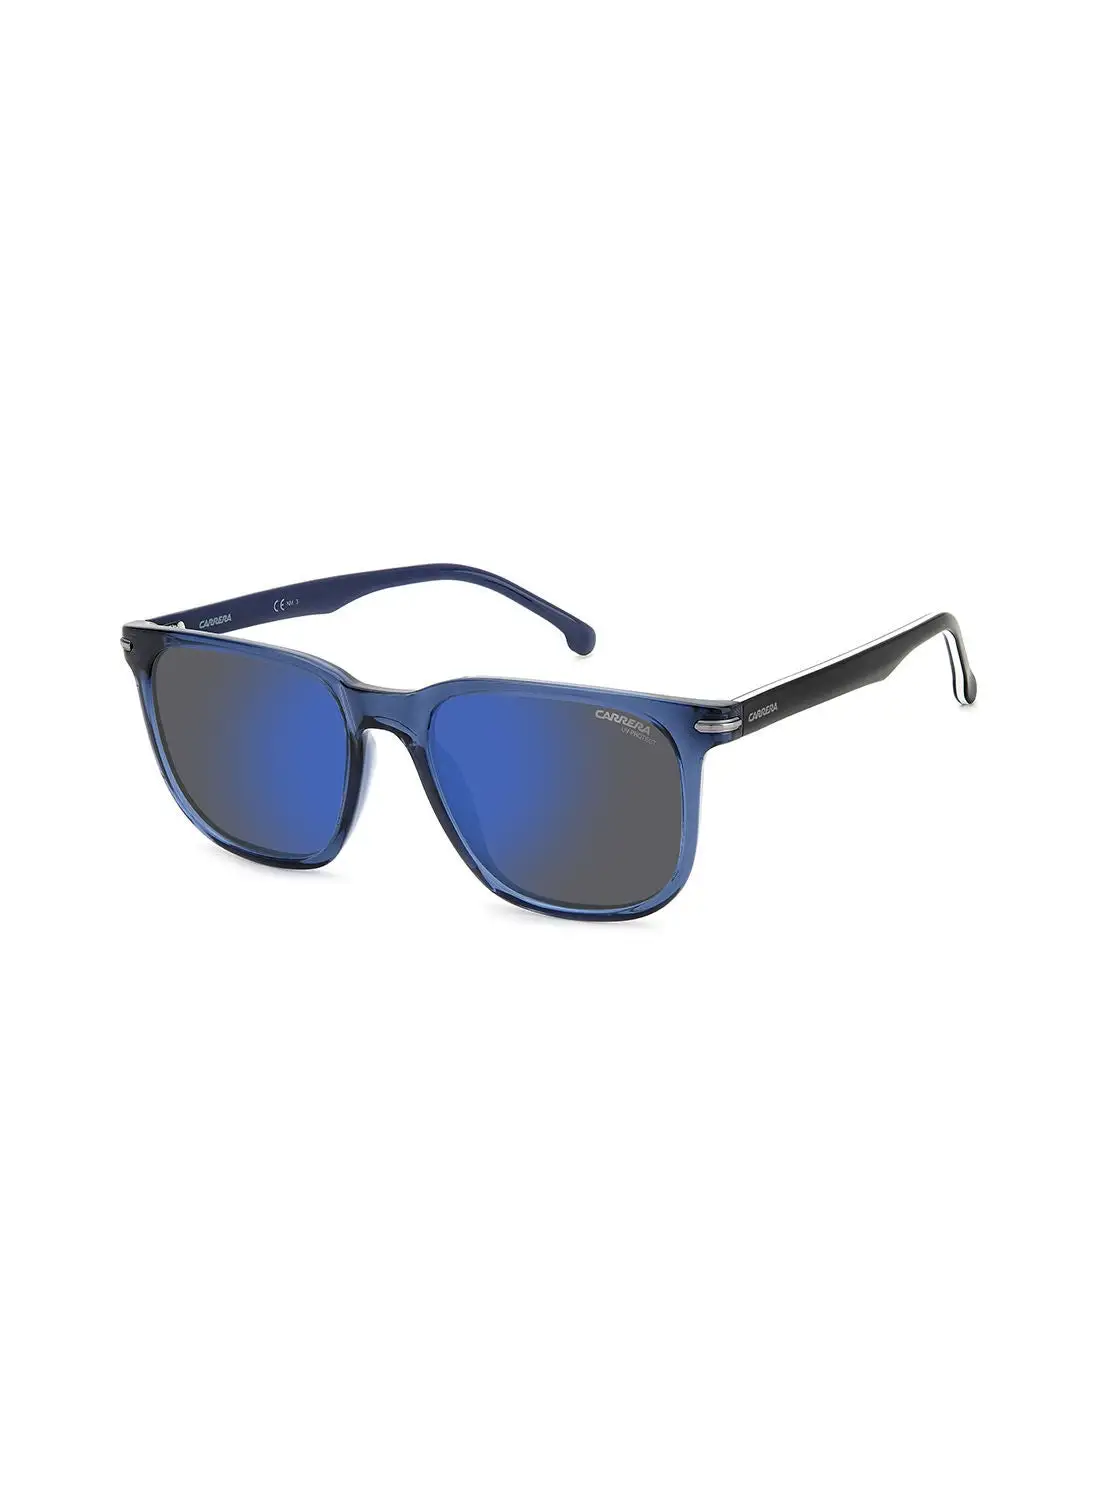 Carrera Unisex UV Protection Square Sunglasses - Carrera 300/S Blue 54 - Lens Size: 54 Mm